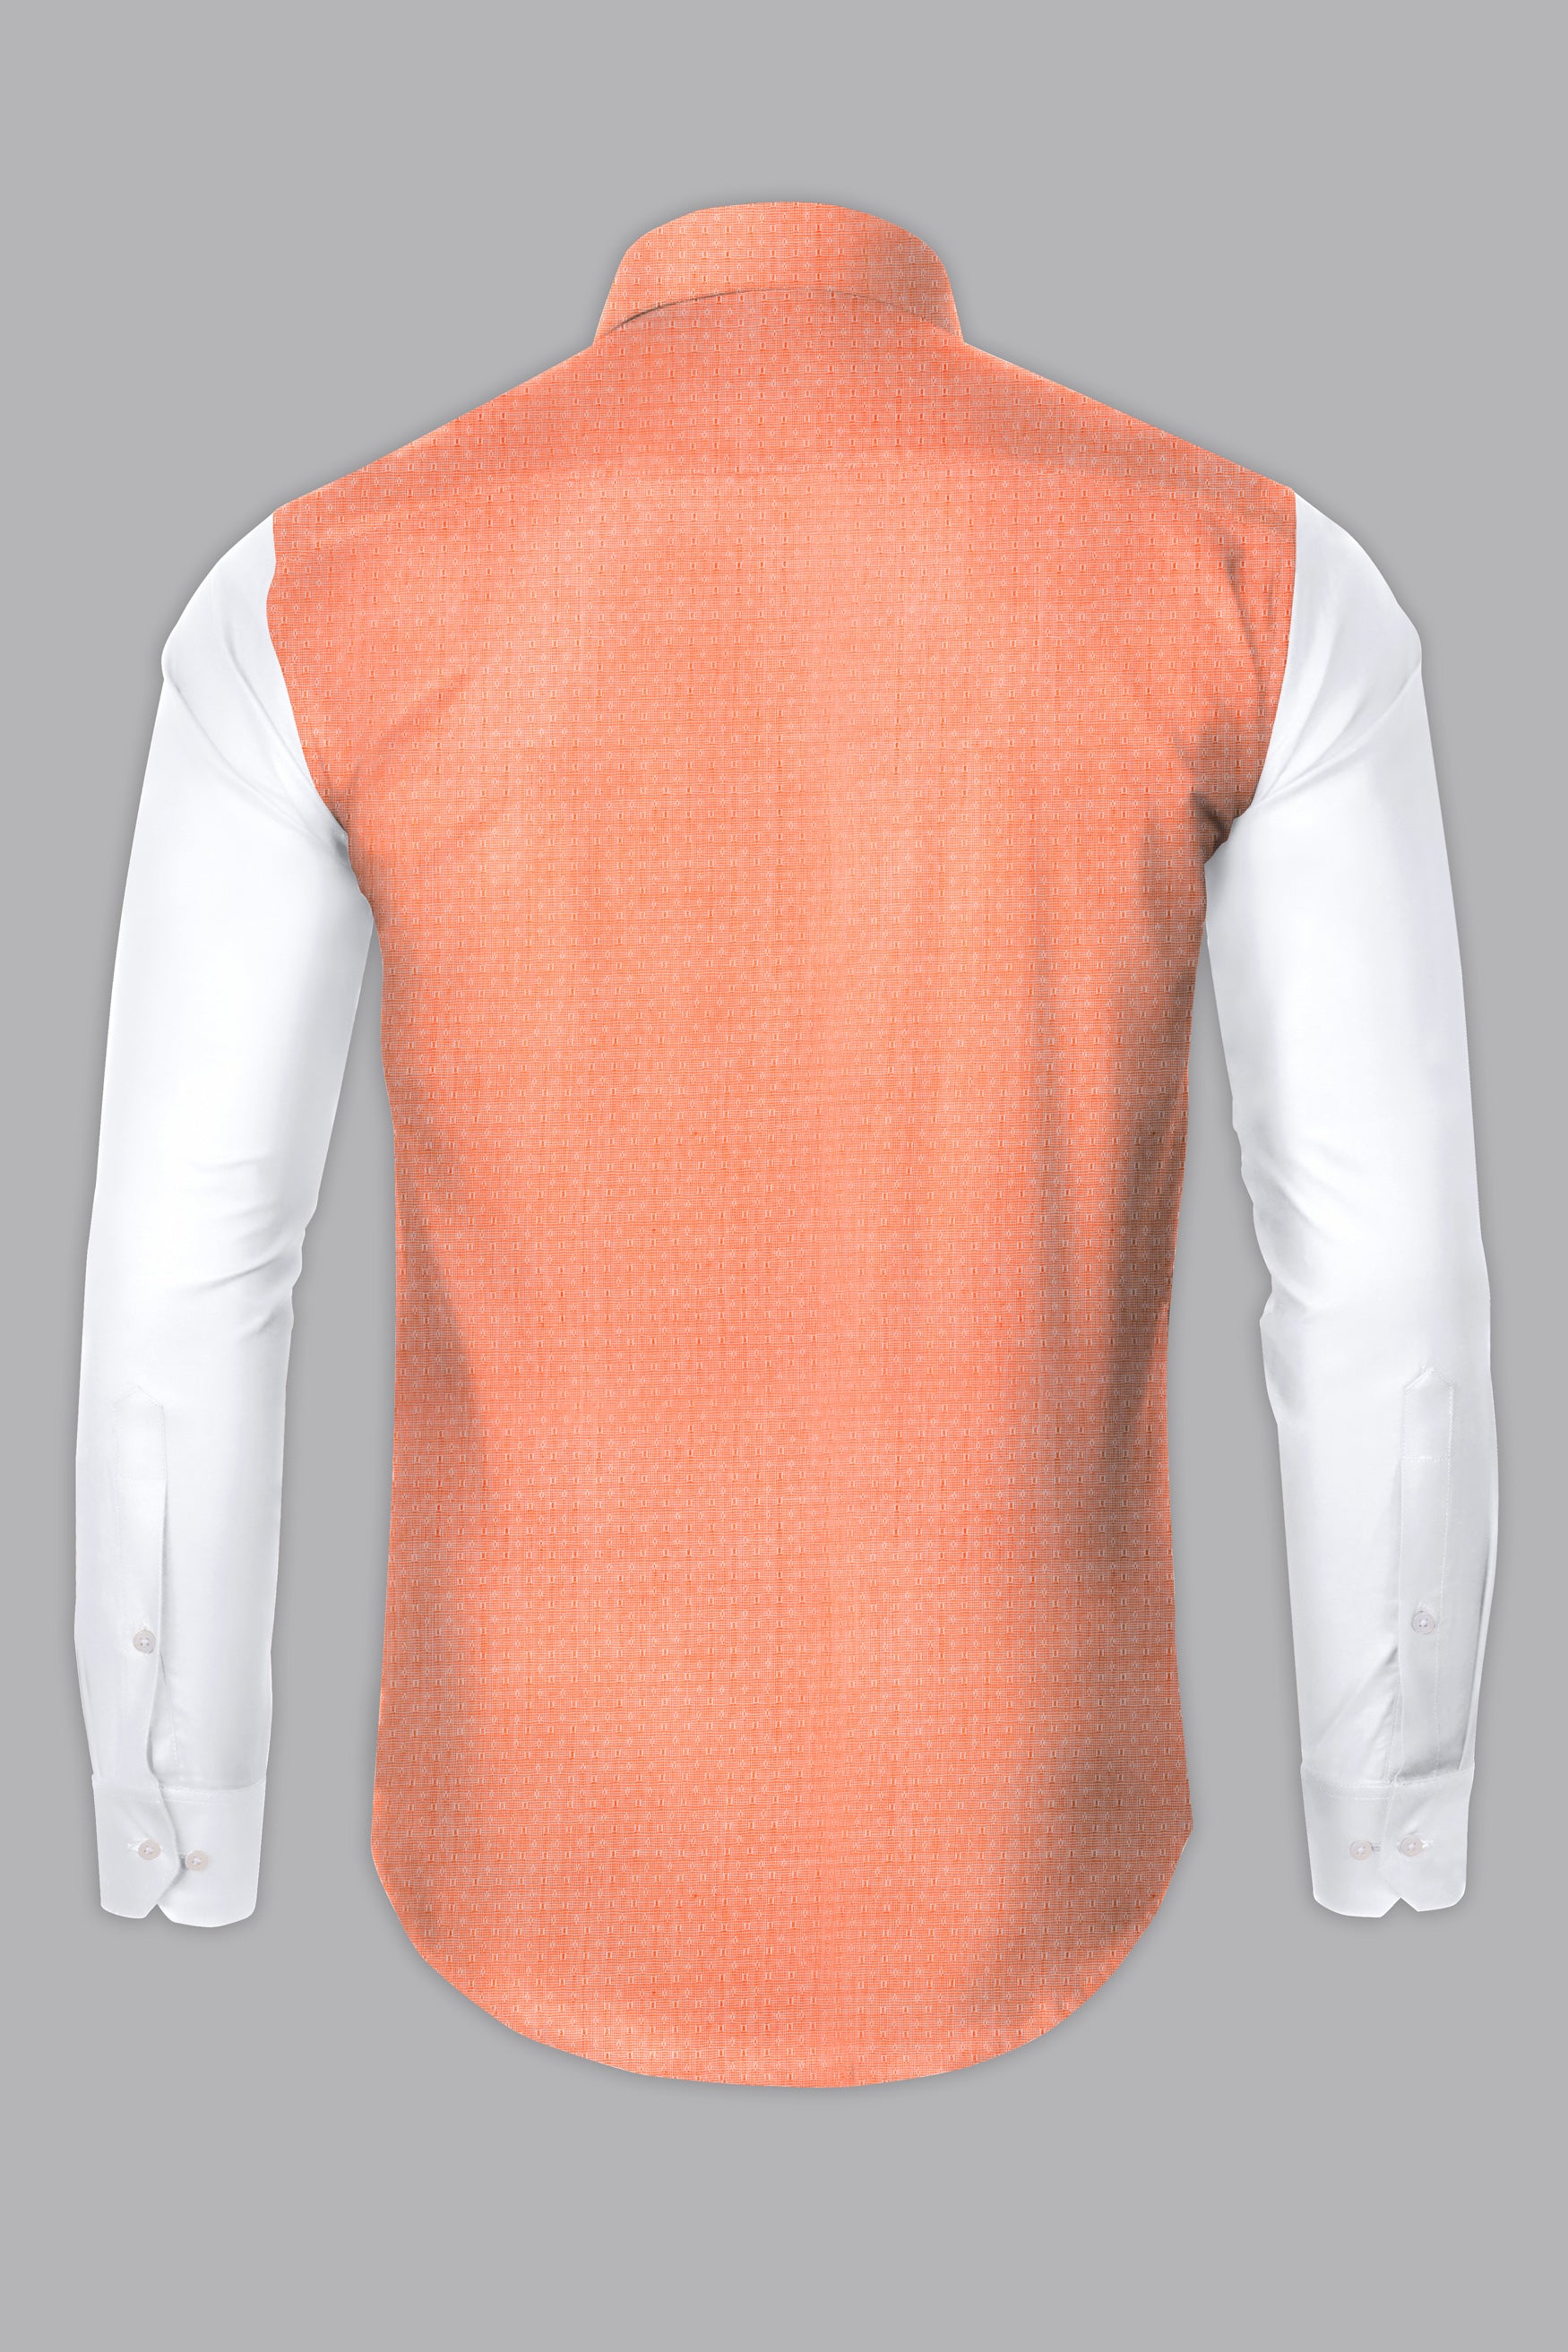 Apricot Orange with Bright White Half and Half Dobby Textured Premium Giza Cotton Designer Shirt